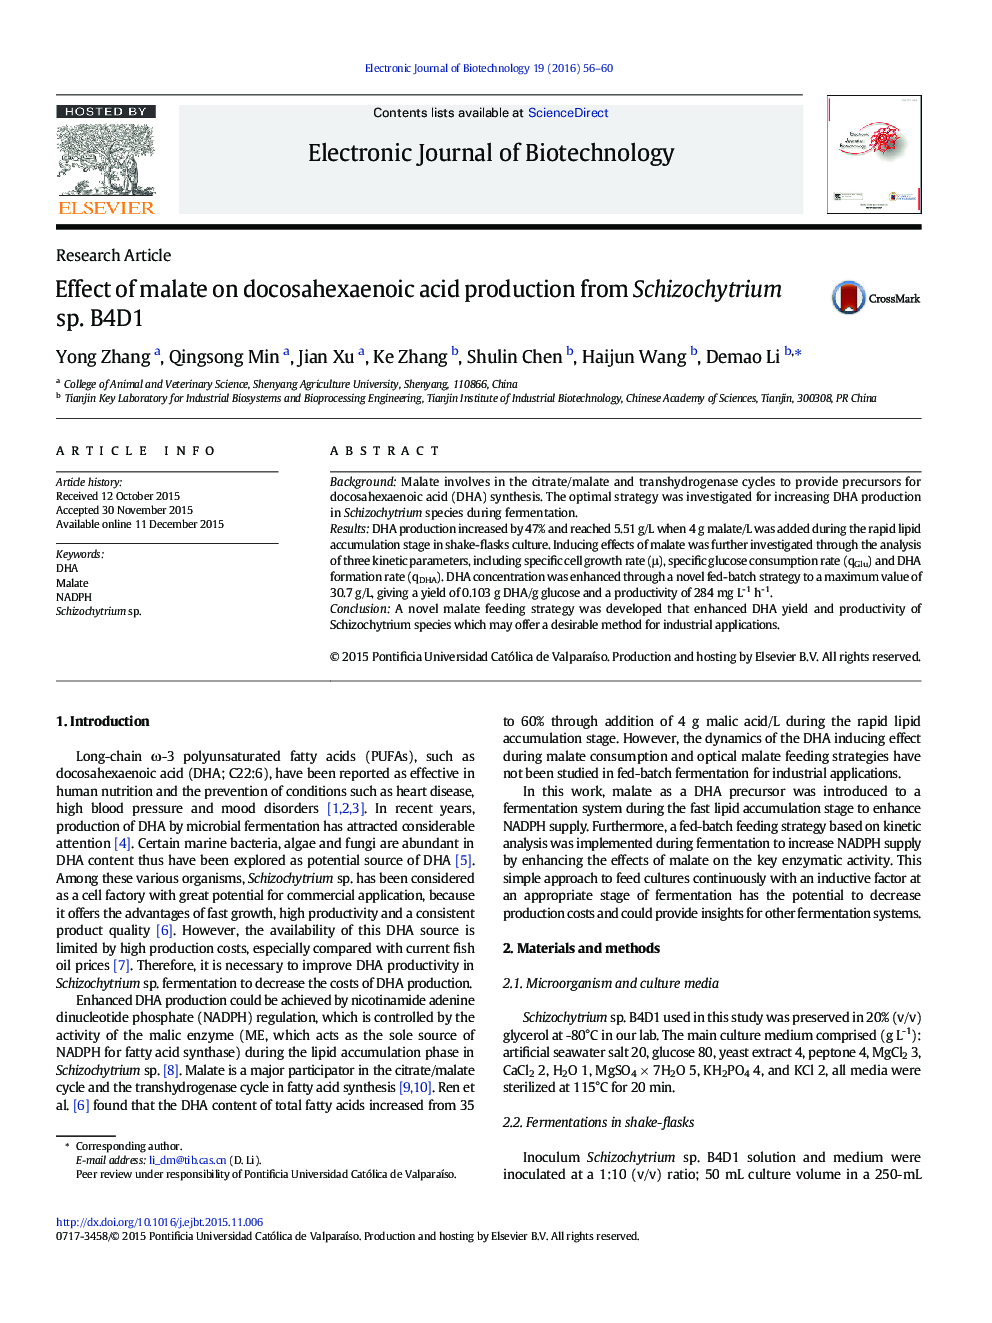 Effect of malate on docosahexaenoic acid production from Schizochytrium sp. B4D1 